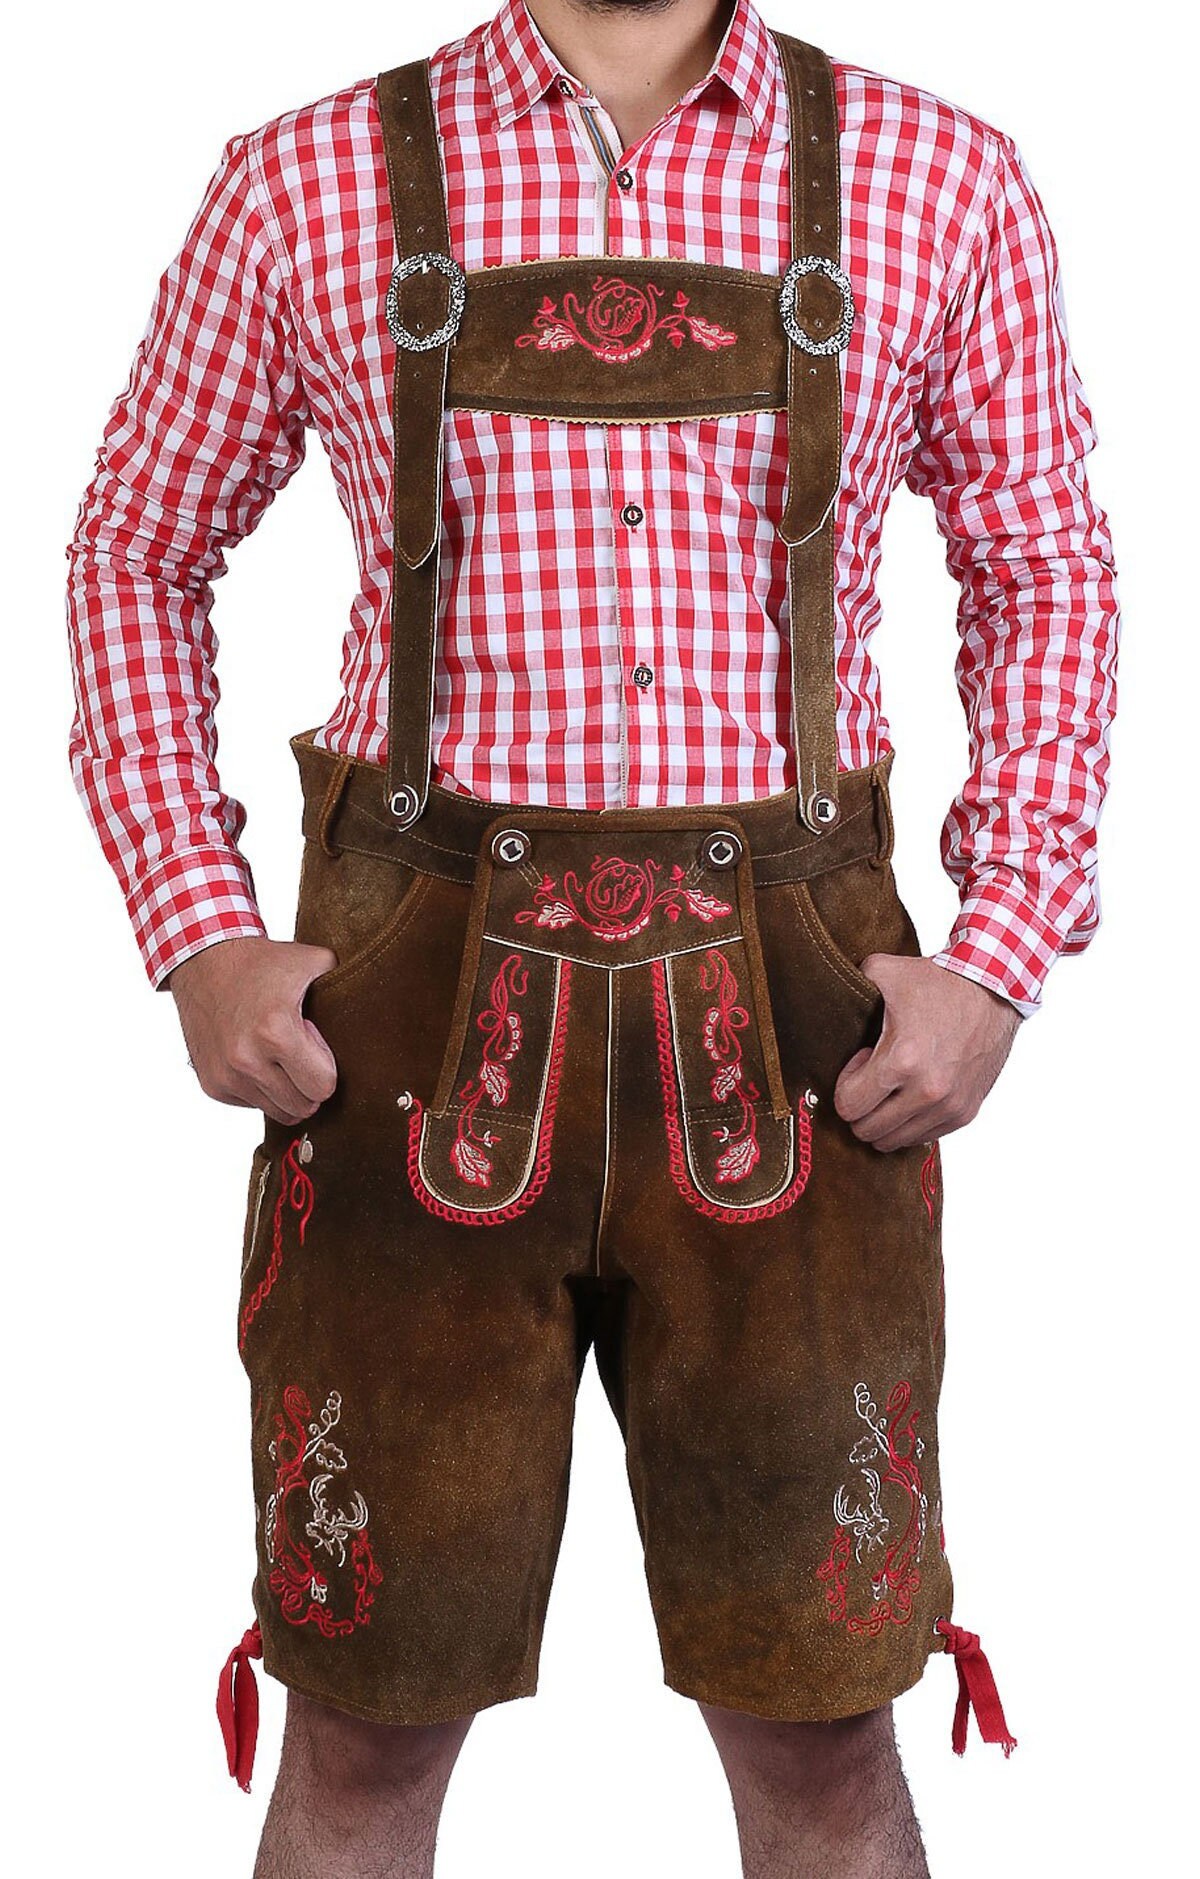 Buffalo Lederhosen with Suspenders Men Trachten Short Light Brown Oktoberfest German Lederhosen Clothing Mens Clothing Shorts 